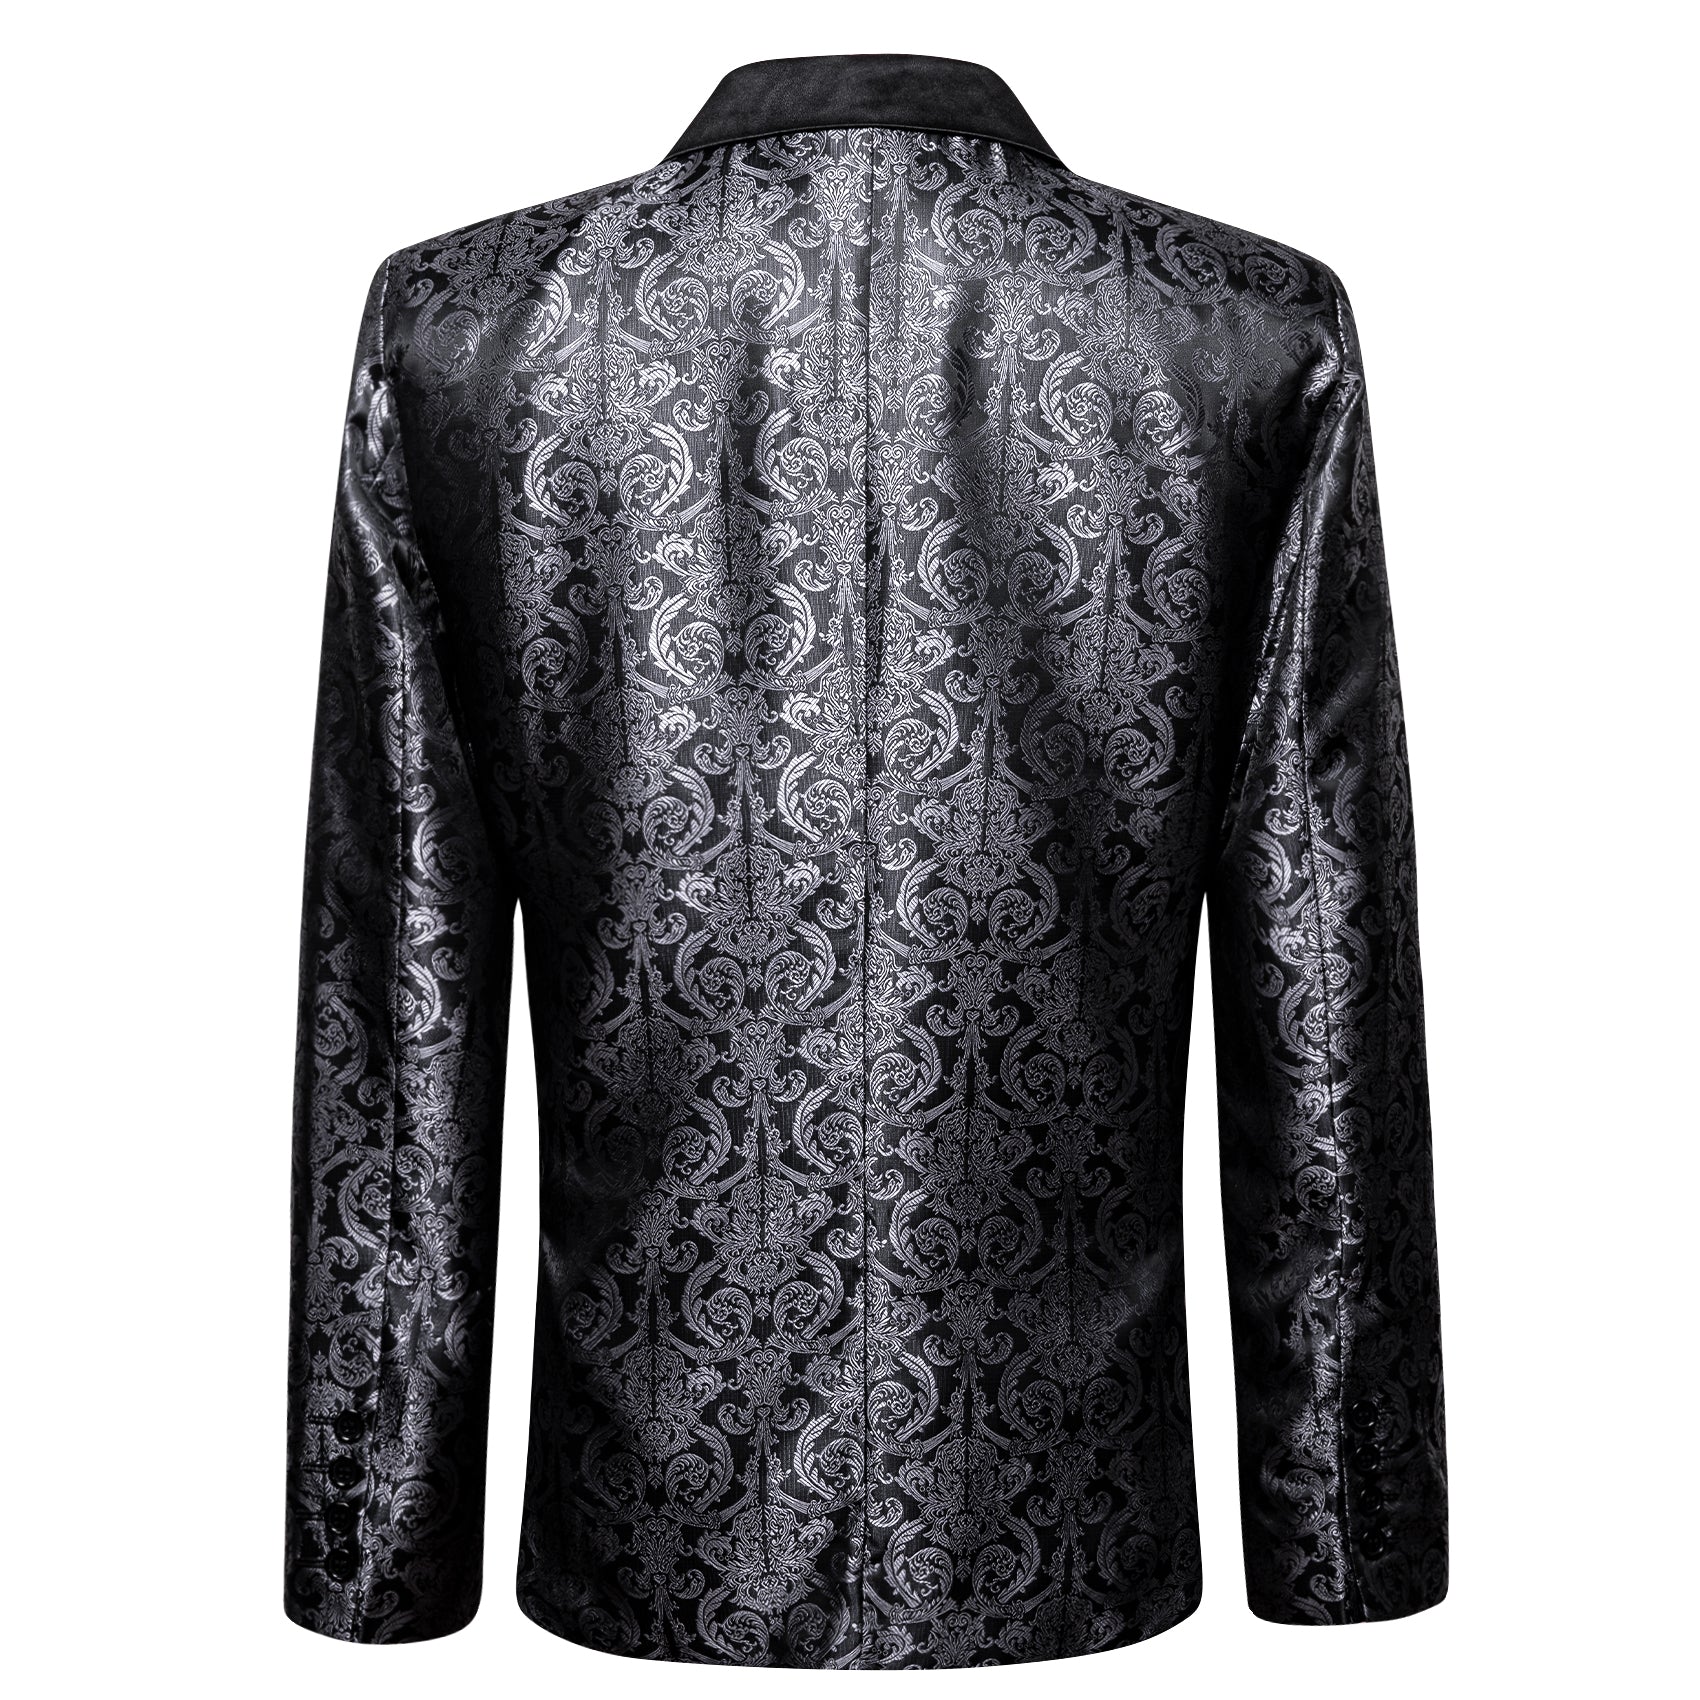 Men's Dress Party Black Silver Floral Suit Jacket Slim One Button Stylish Blazer